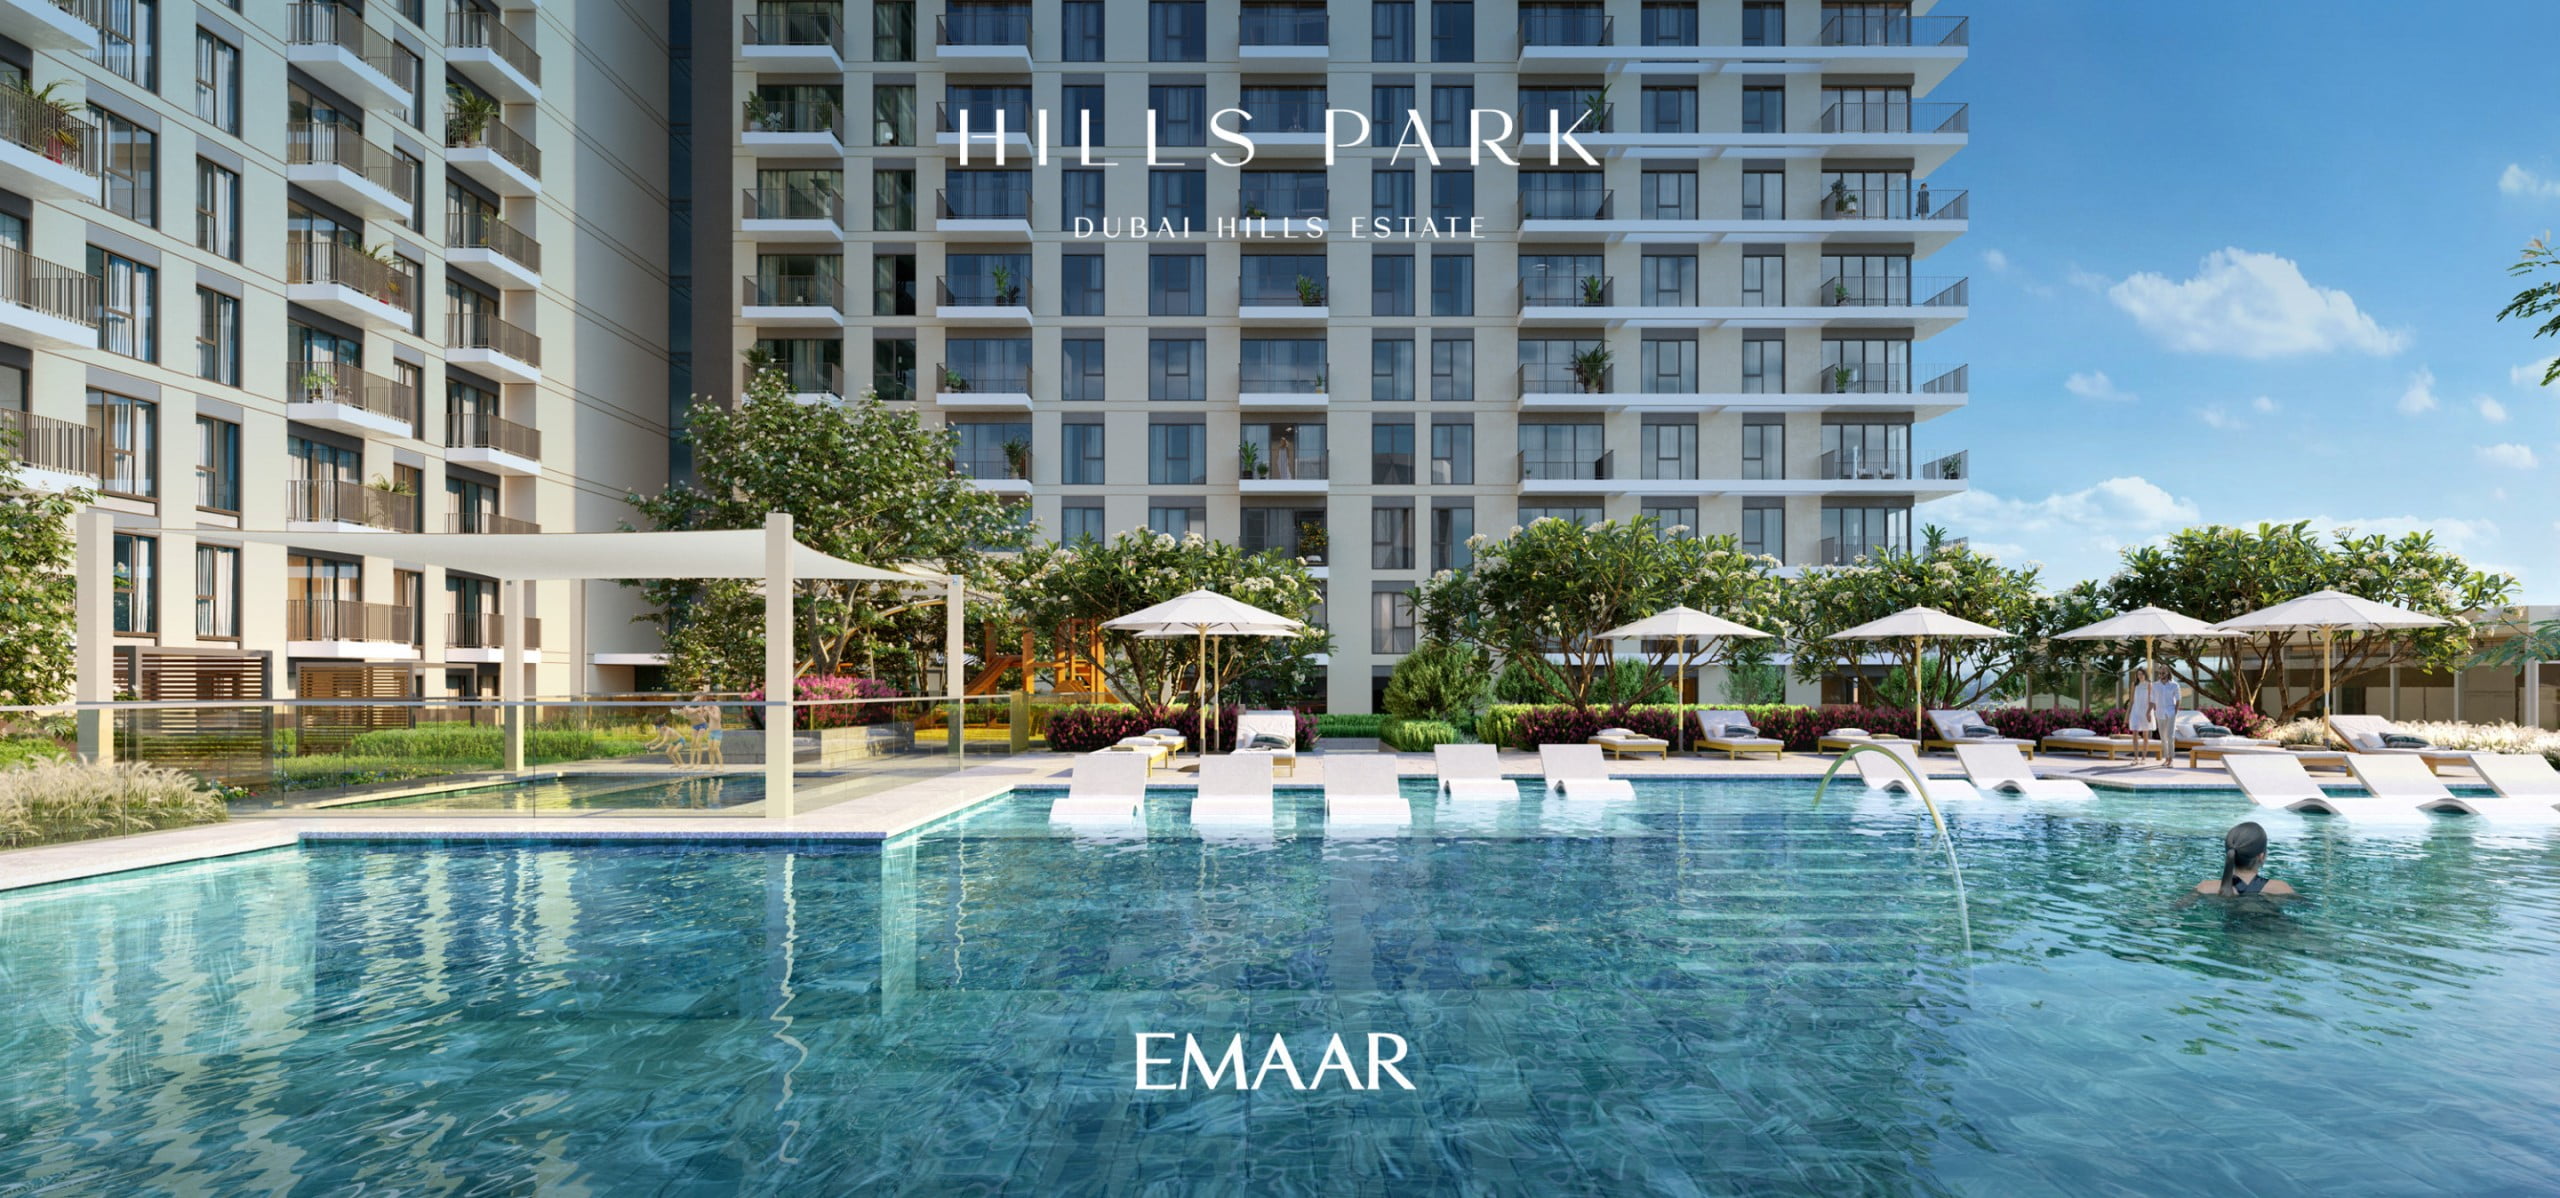 18287 HILLS PARK DHE 06 1 scaled - Immobilier Dubai